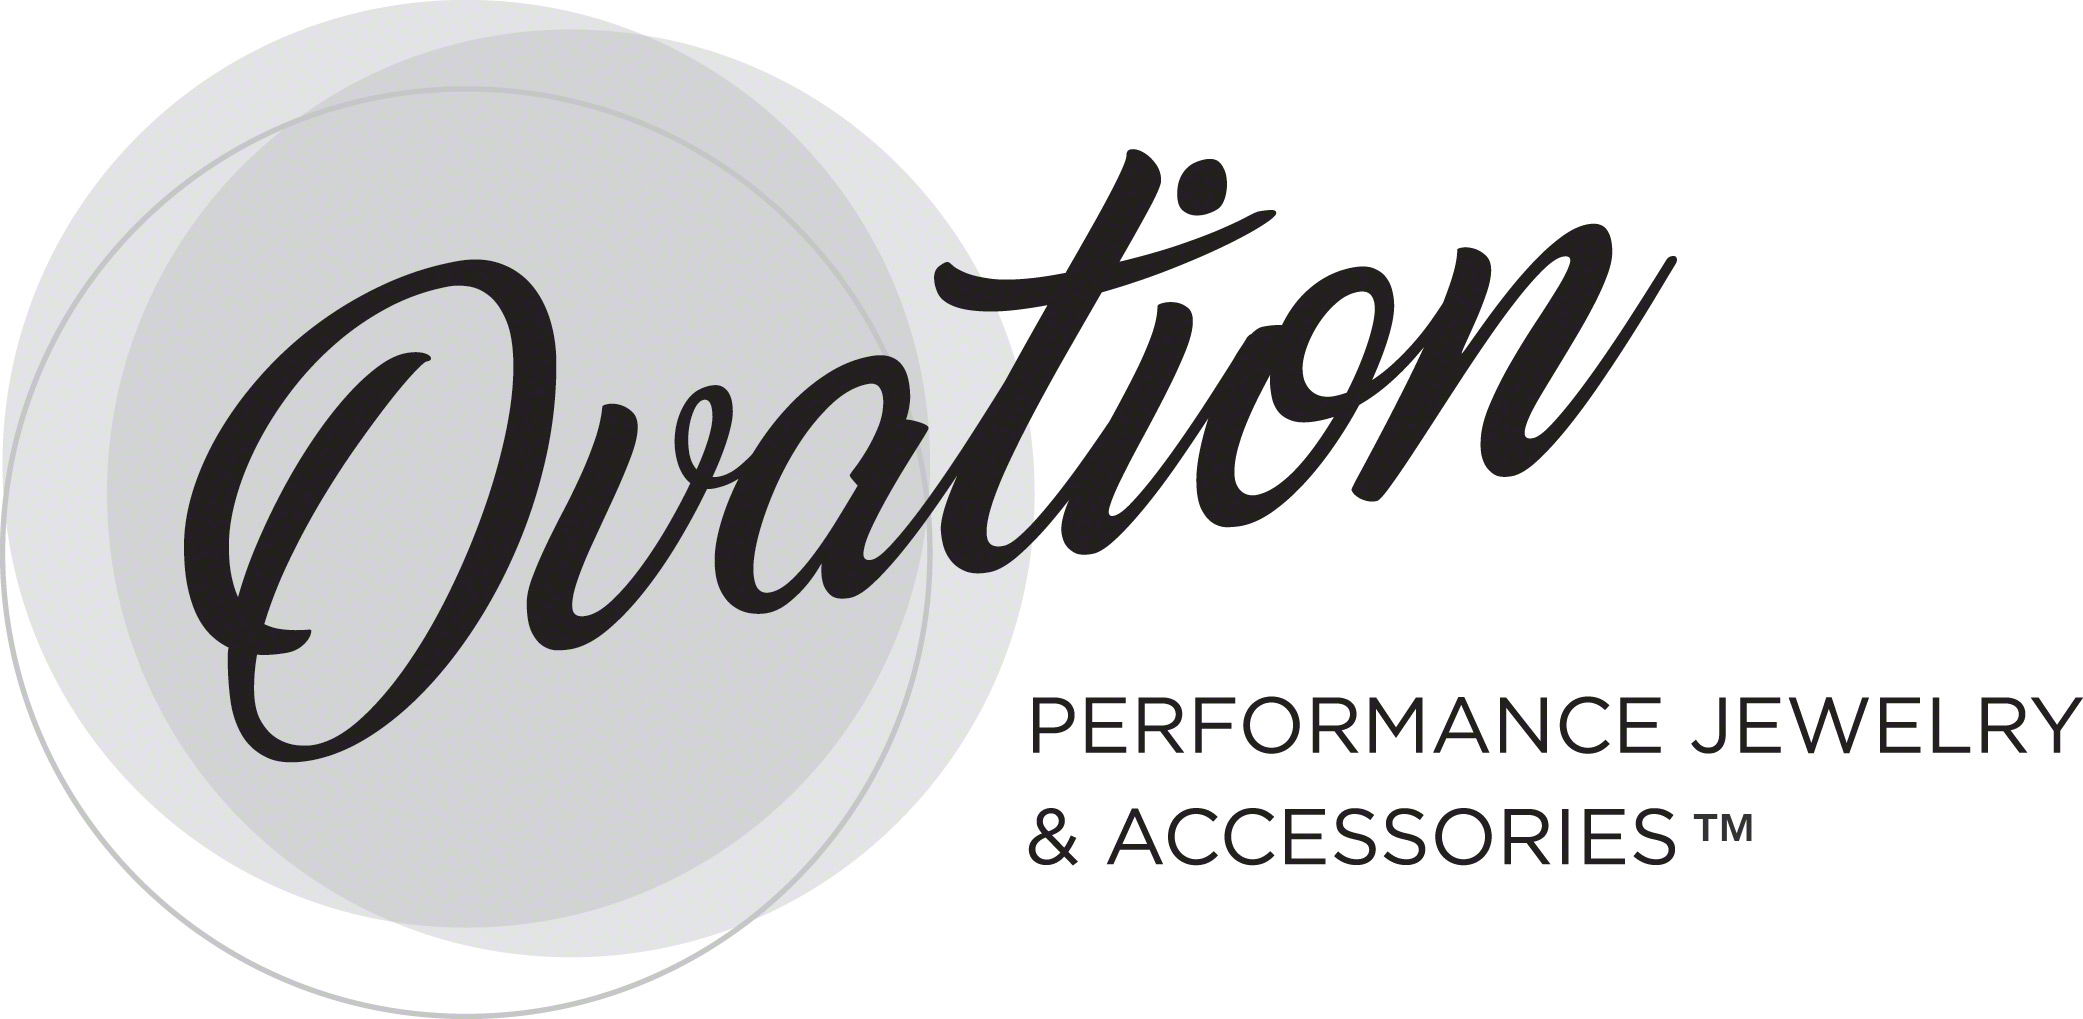 Ovation Performance Jewelry & Accessories logo